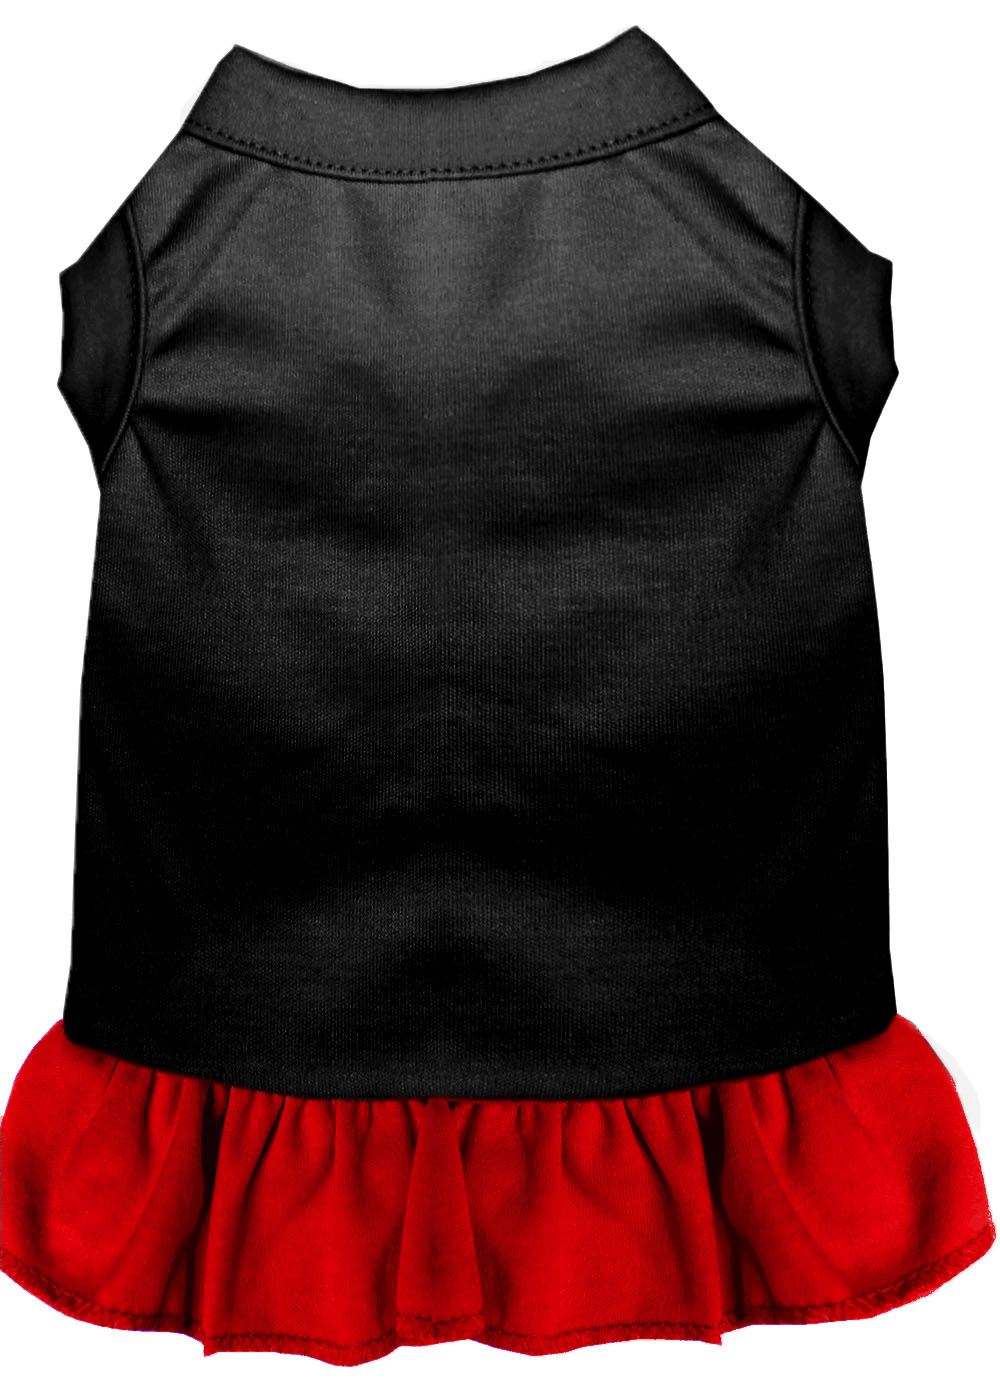 Plain Pet Dress Black with Red Lg